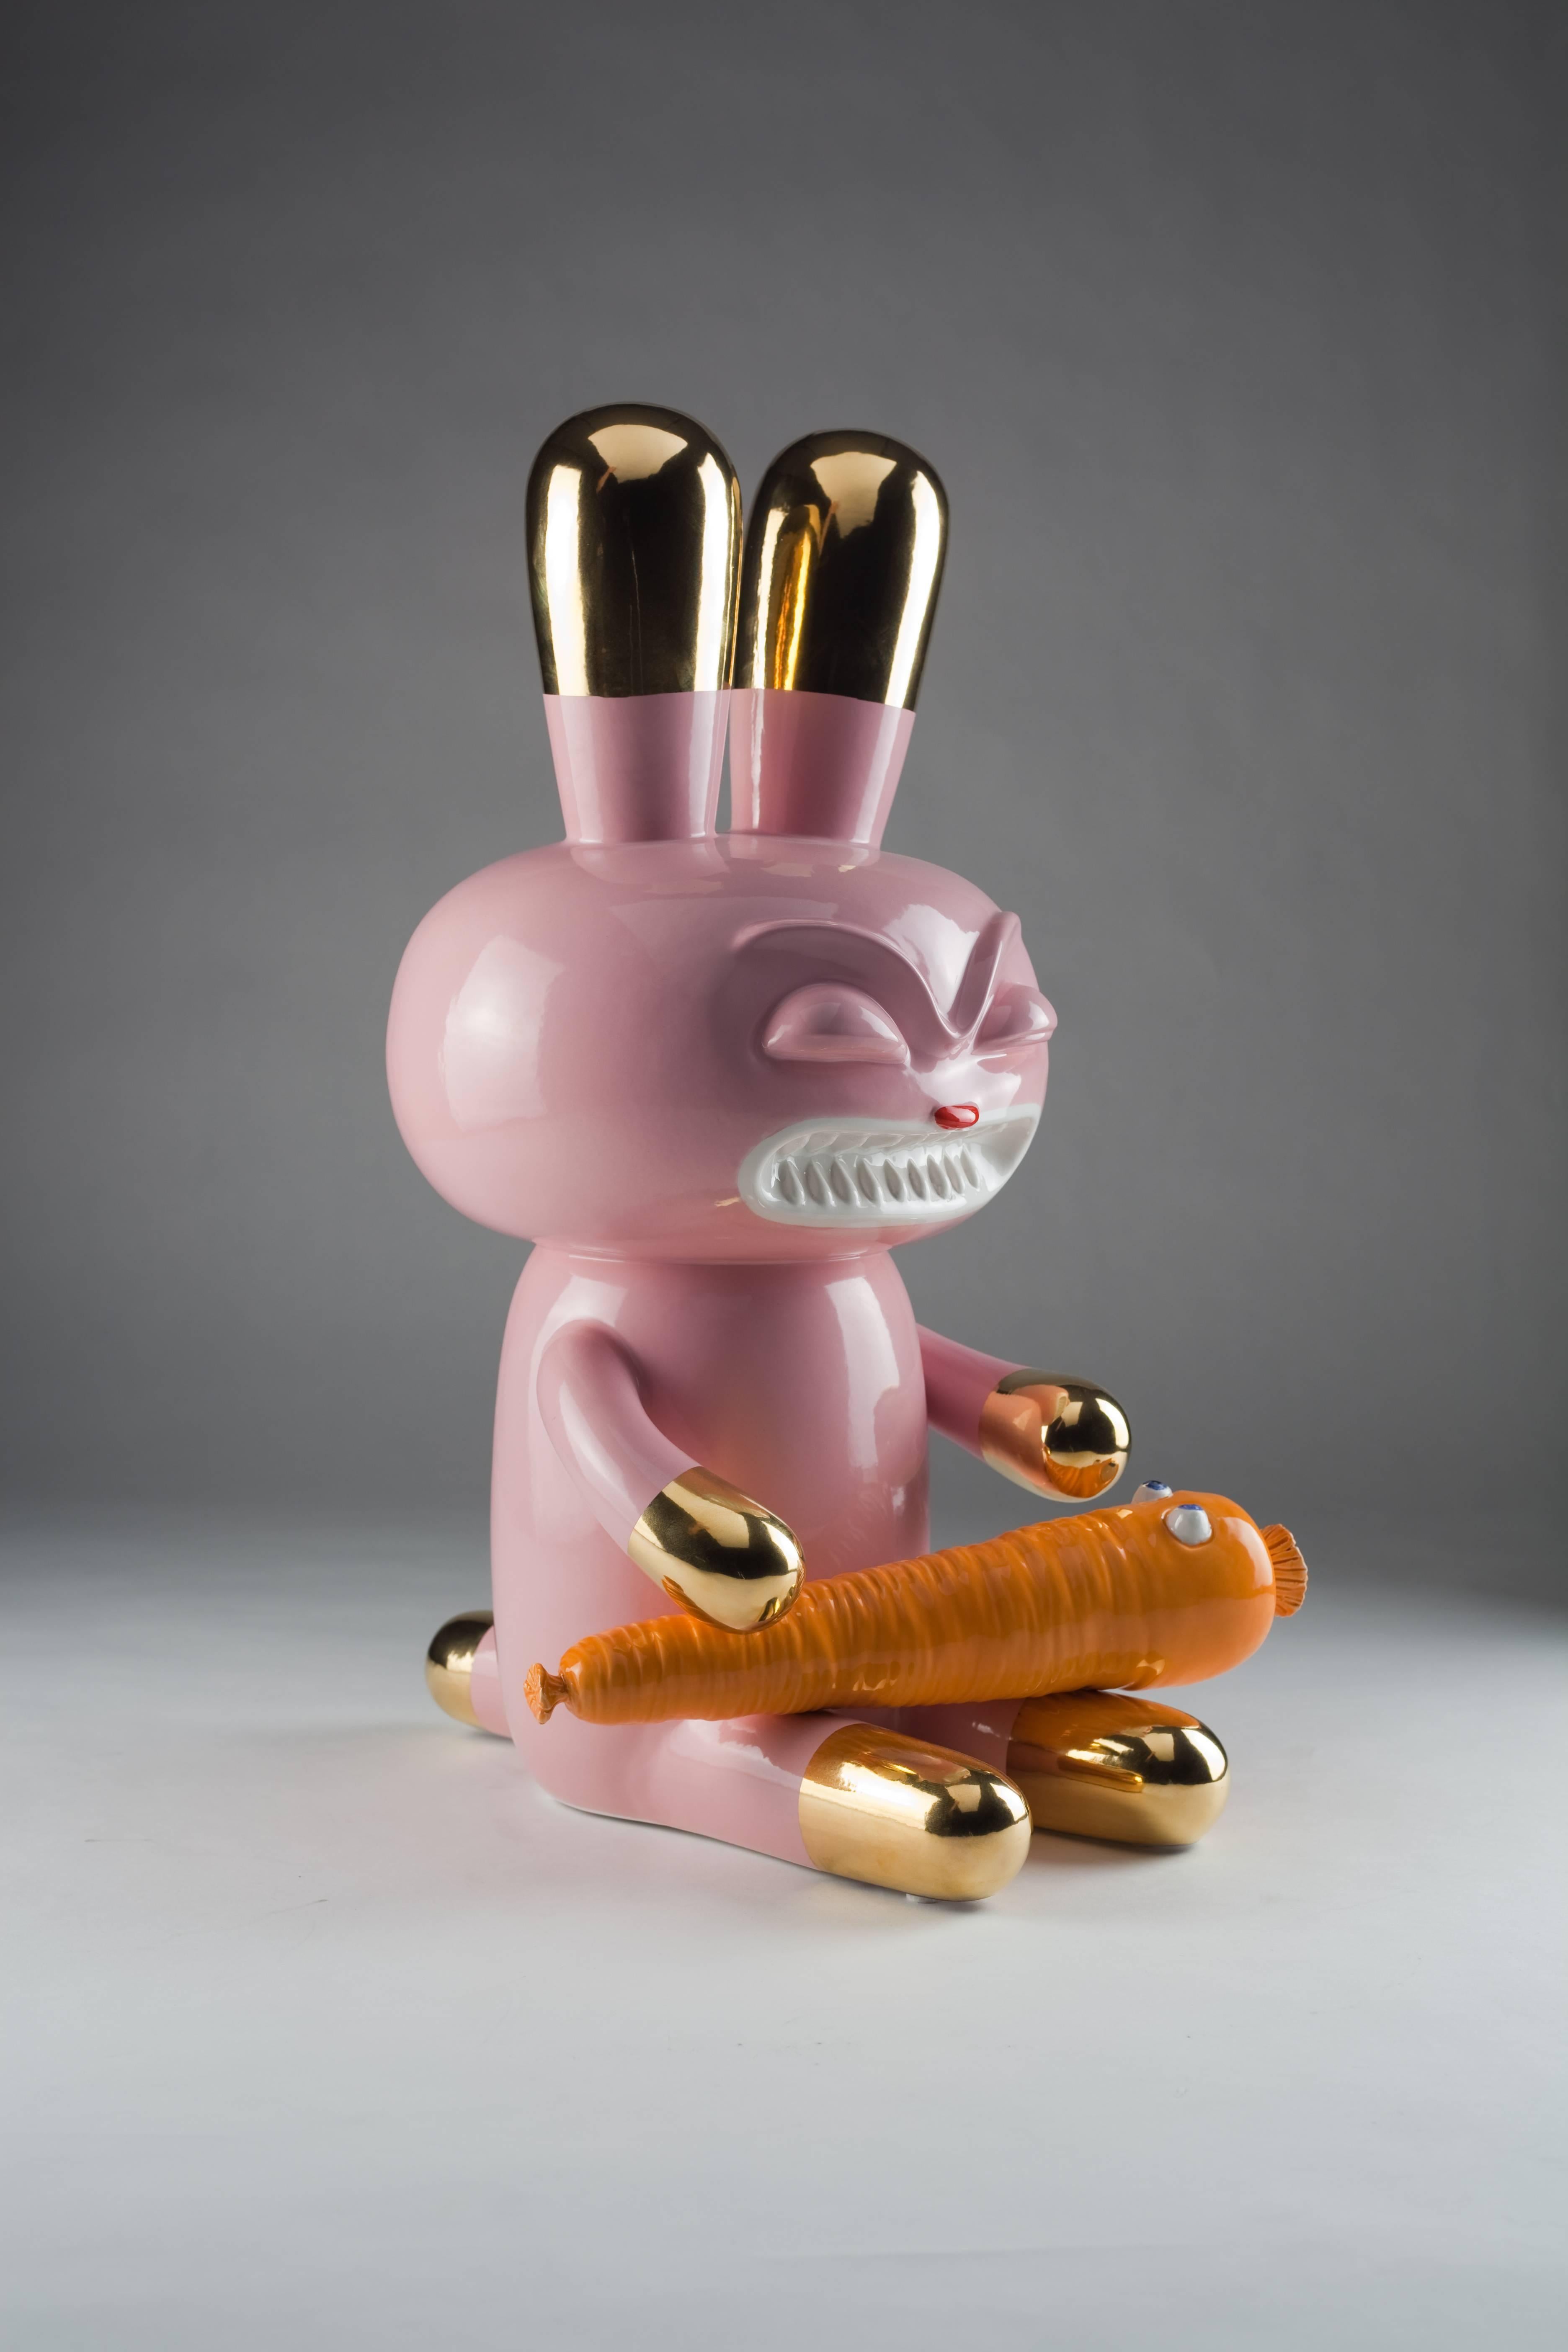 Modern Massimo Giacon Love Carrot Sculpture Superego Editions, Italy